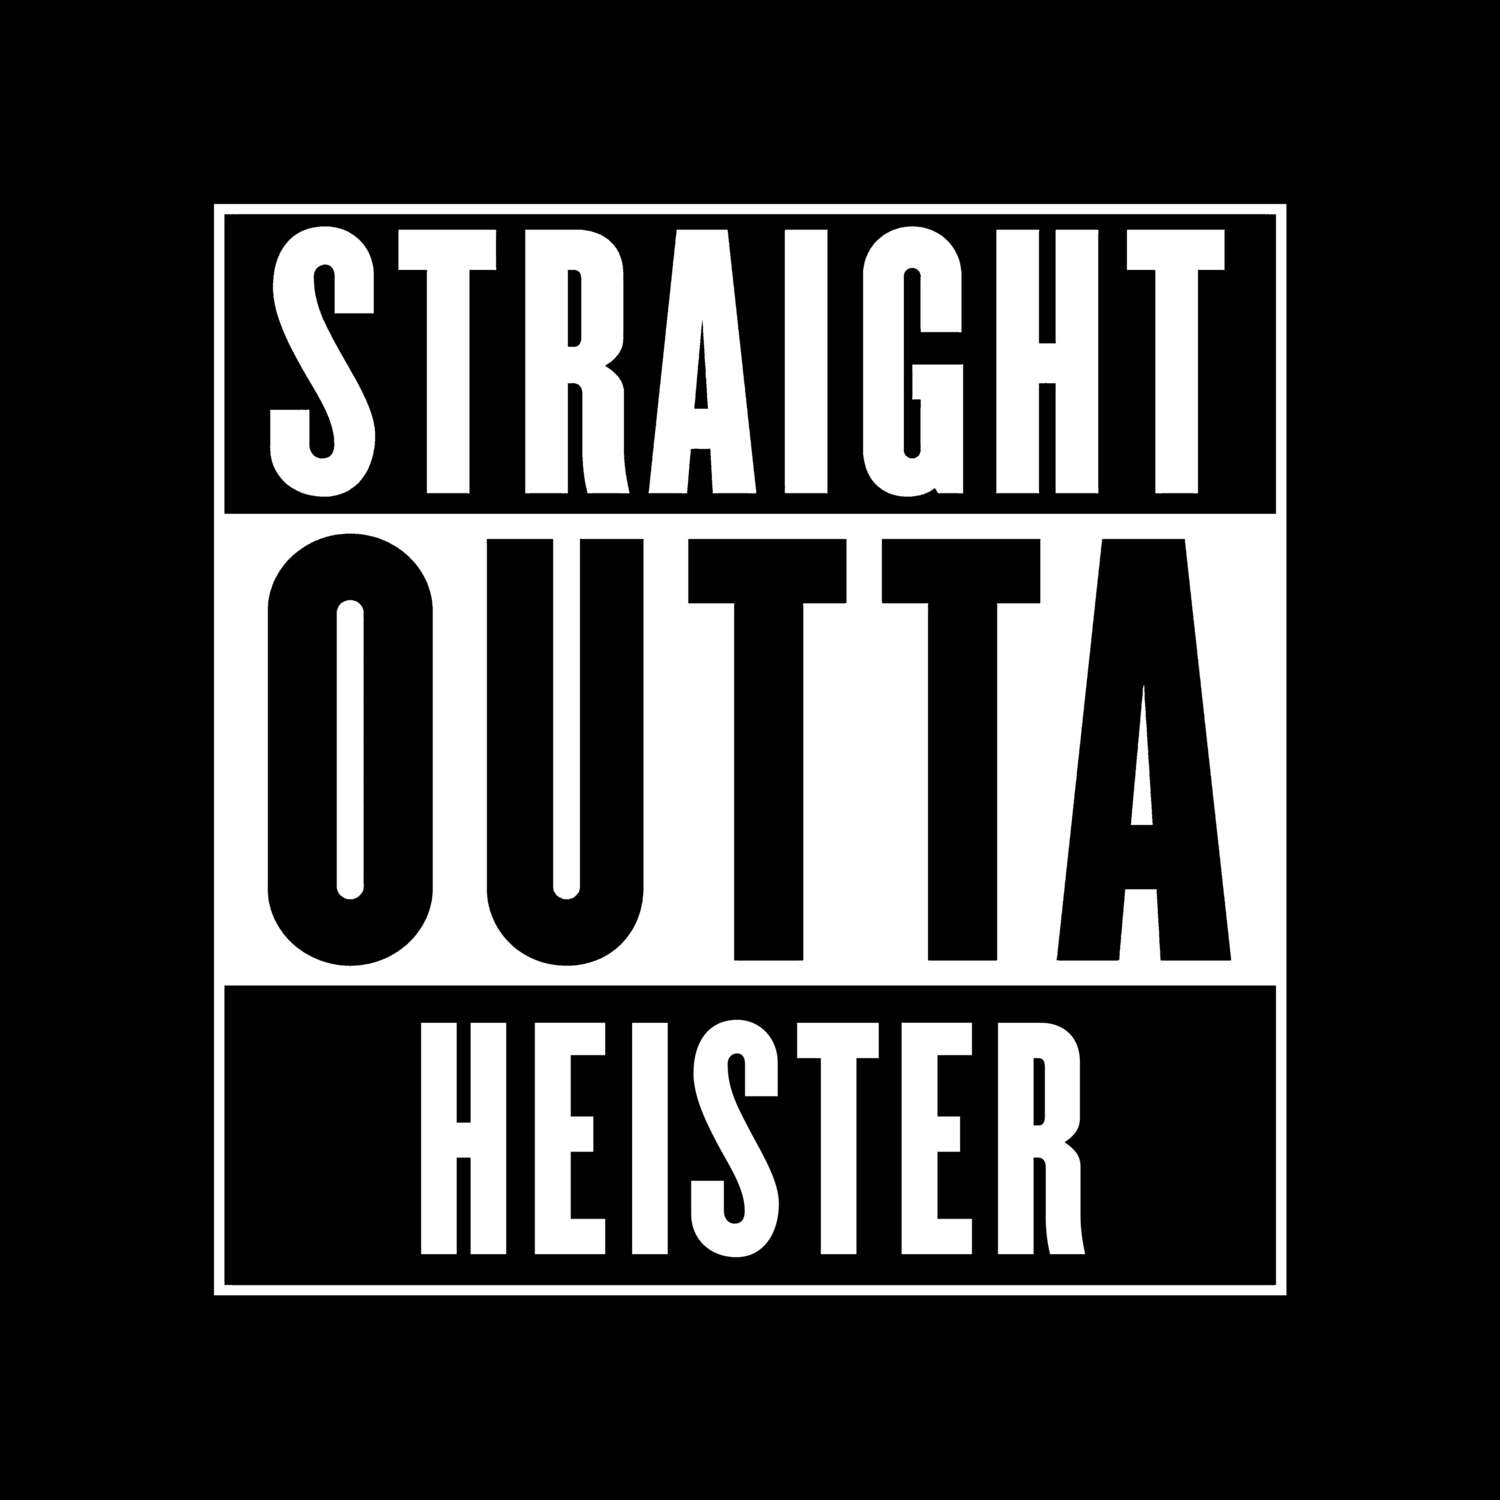 Heister T-Shirt »Straight Outta«